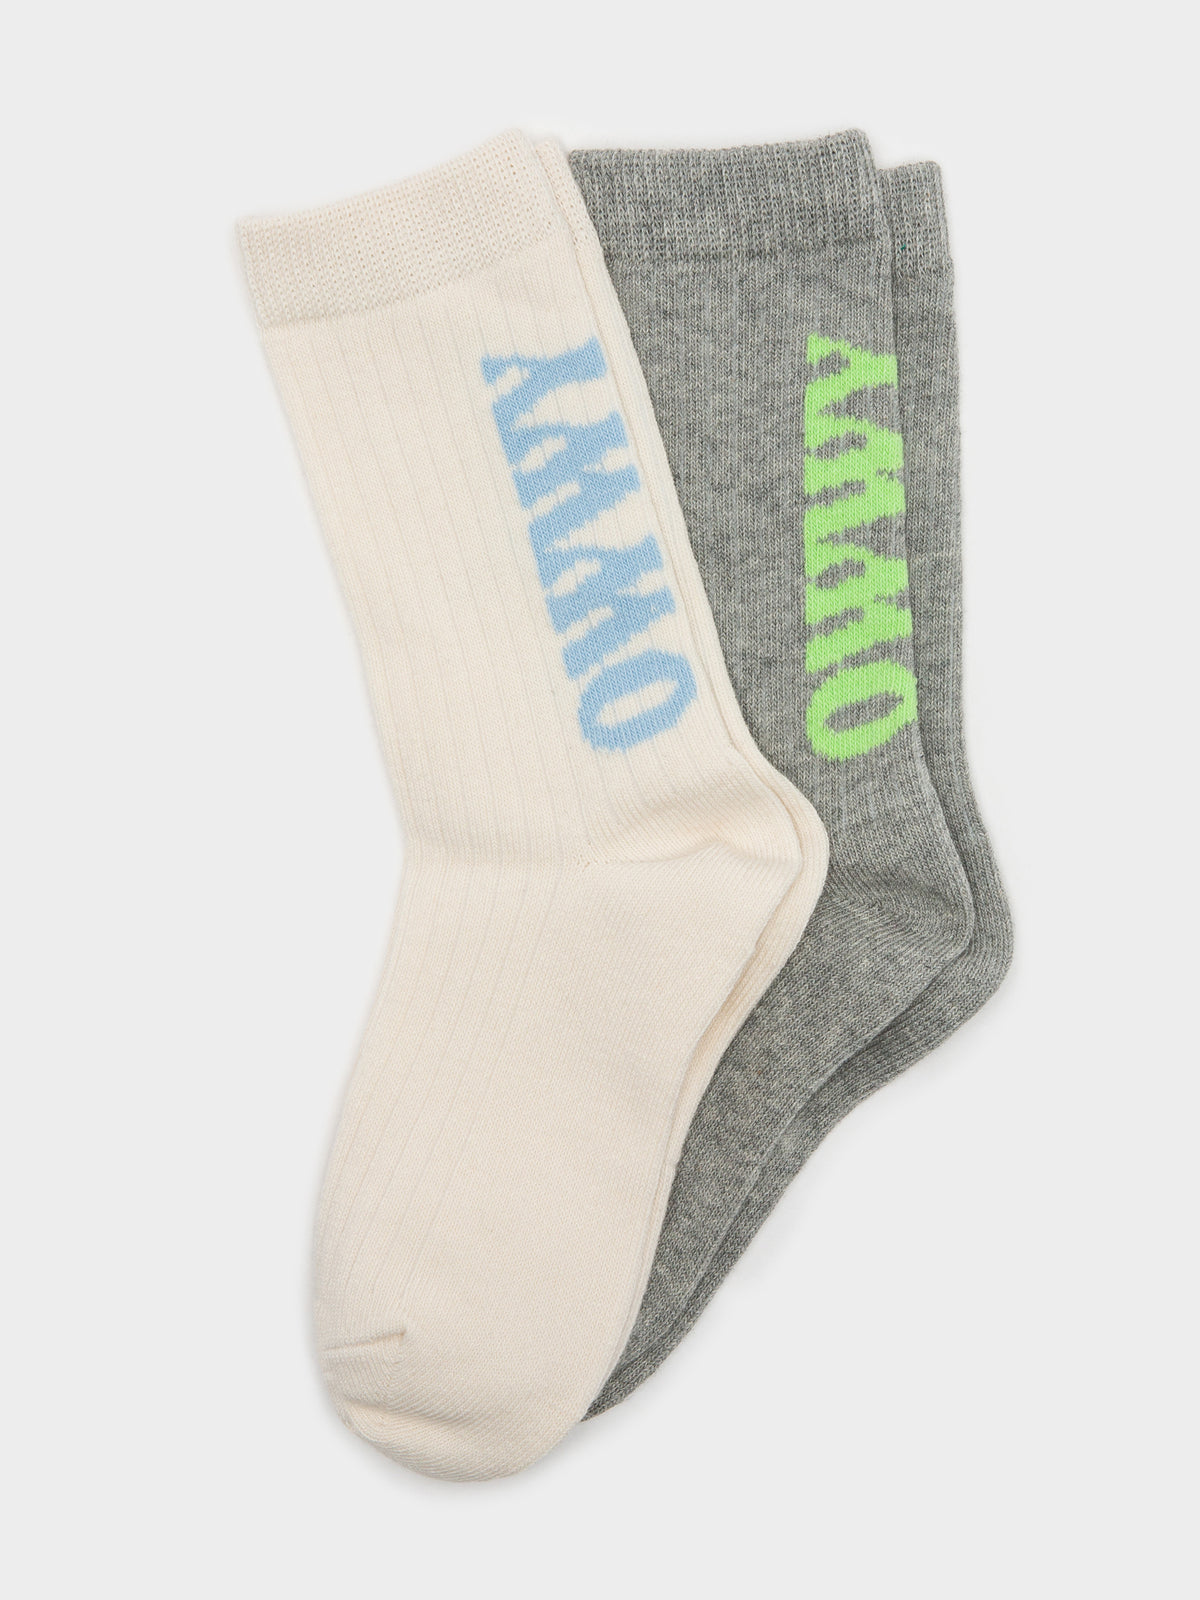 2 Pairs of Socks in White &amp; Grey